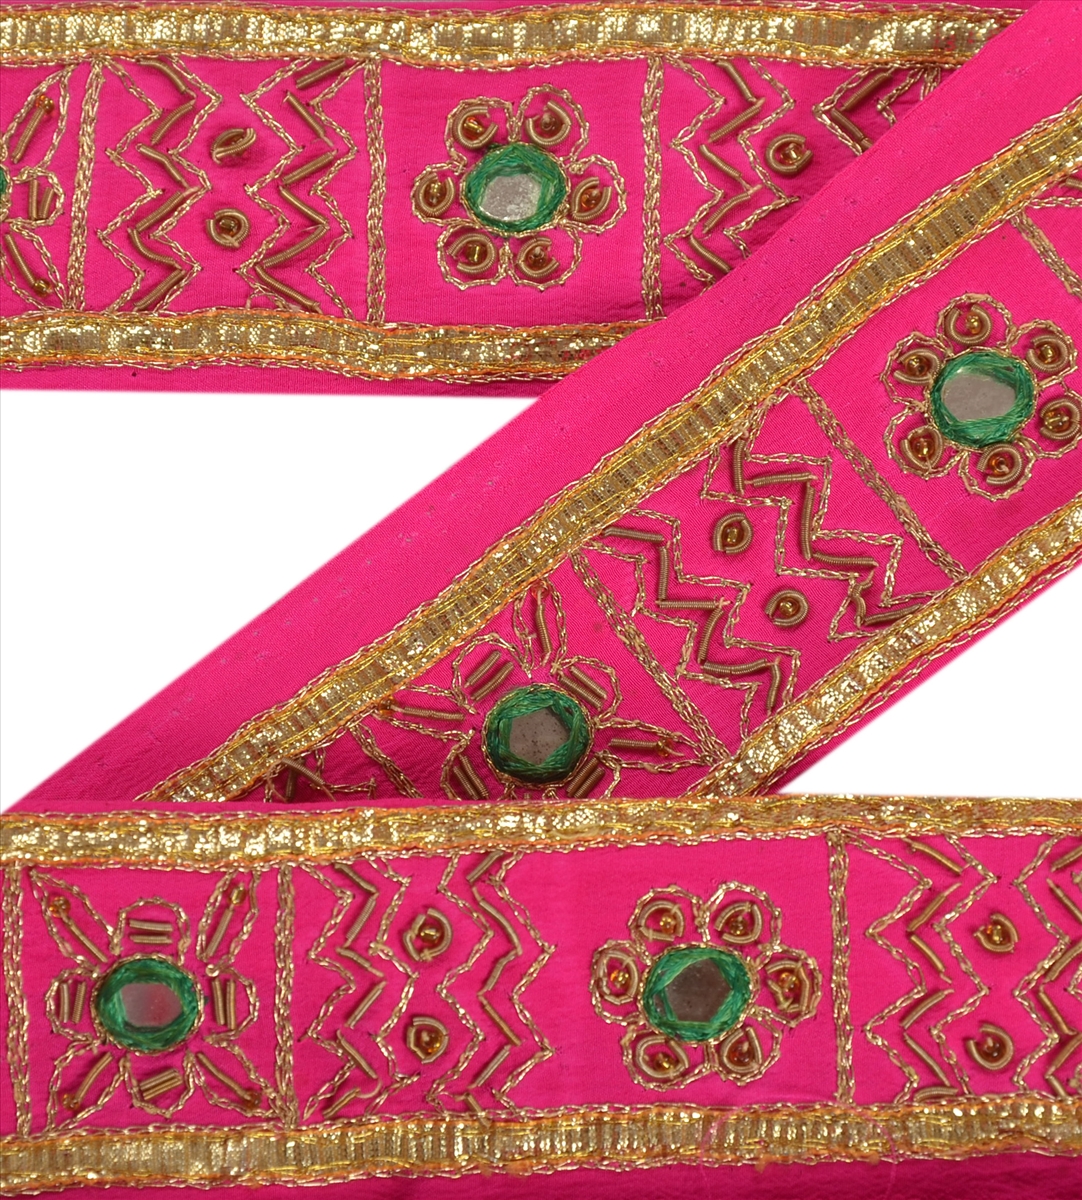 Sanskriti Vintage Decor Sari Border Hand Embroidered Trim Sewing Craft Pink Lace